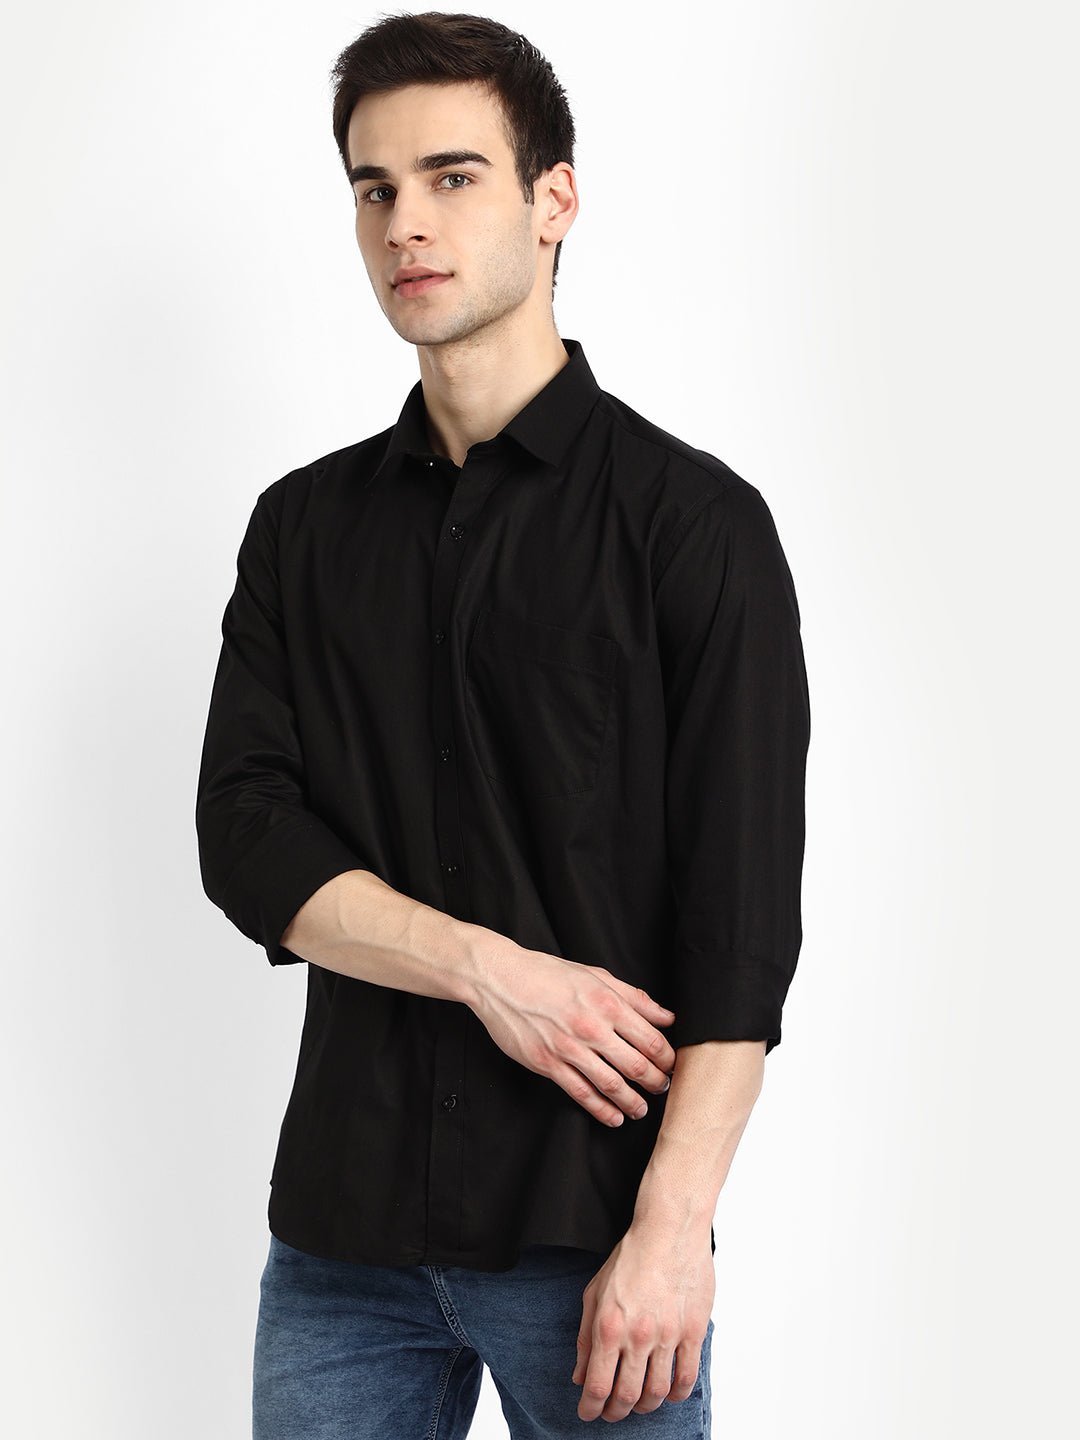 Punekar Cotton Black Color 100% Mercerised Cotton Diagonally Woven Formal Shirt for Men&